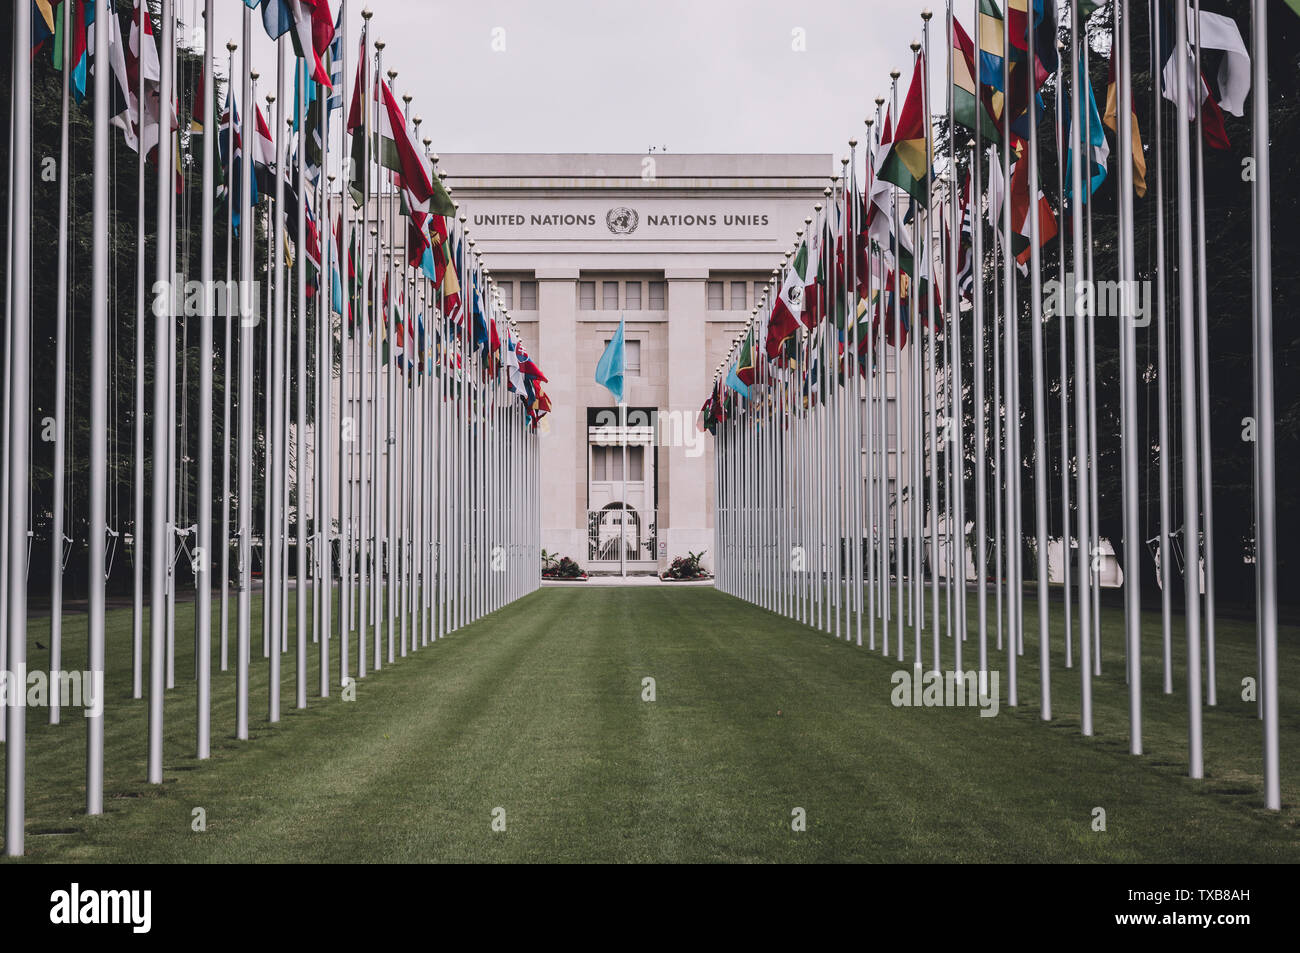 Geneva, Switzerland - July 1, 2017: National flags at the entrance in UN office at Geneva, Switzerland. The United Nations was established in Geneva i Stock Photo